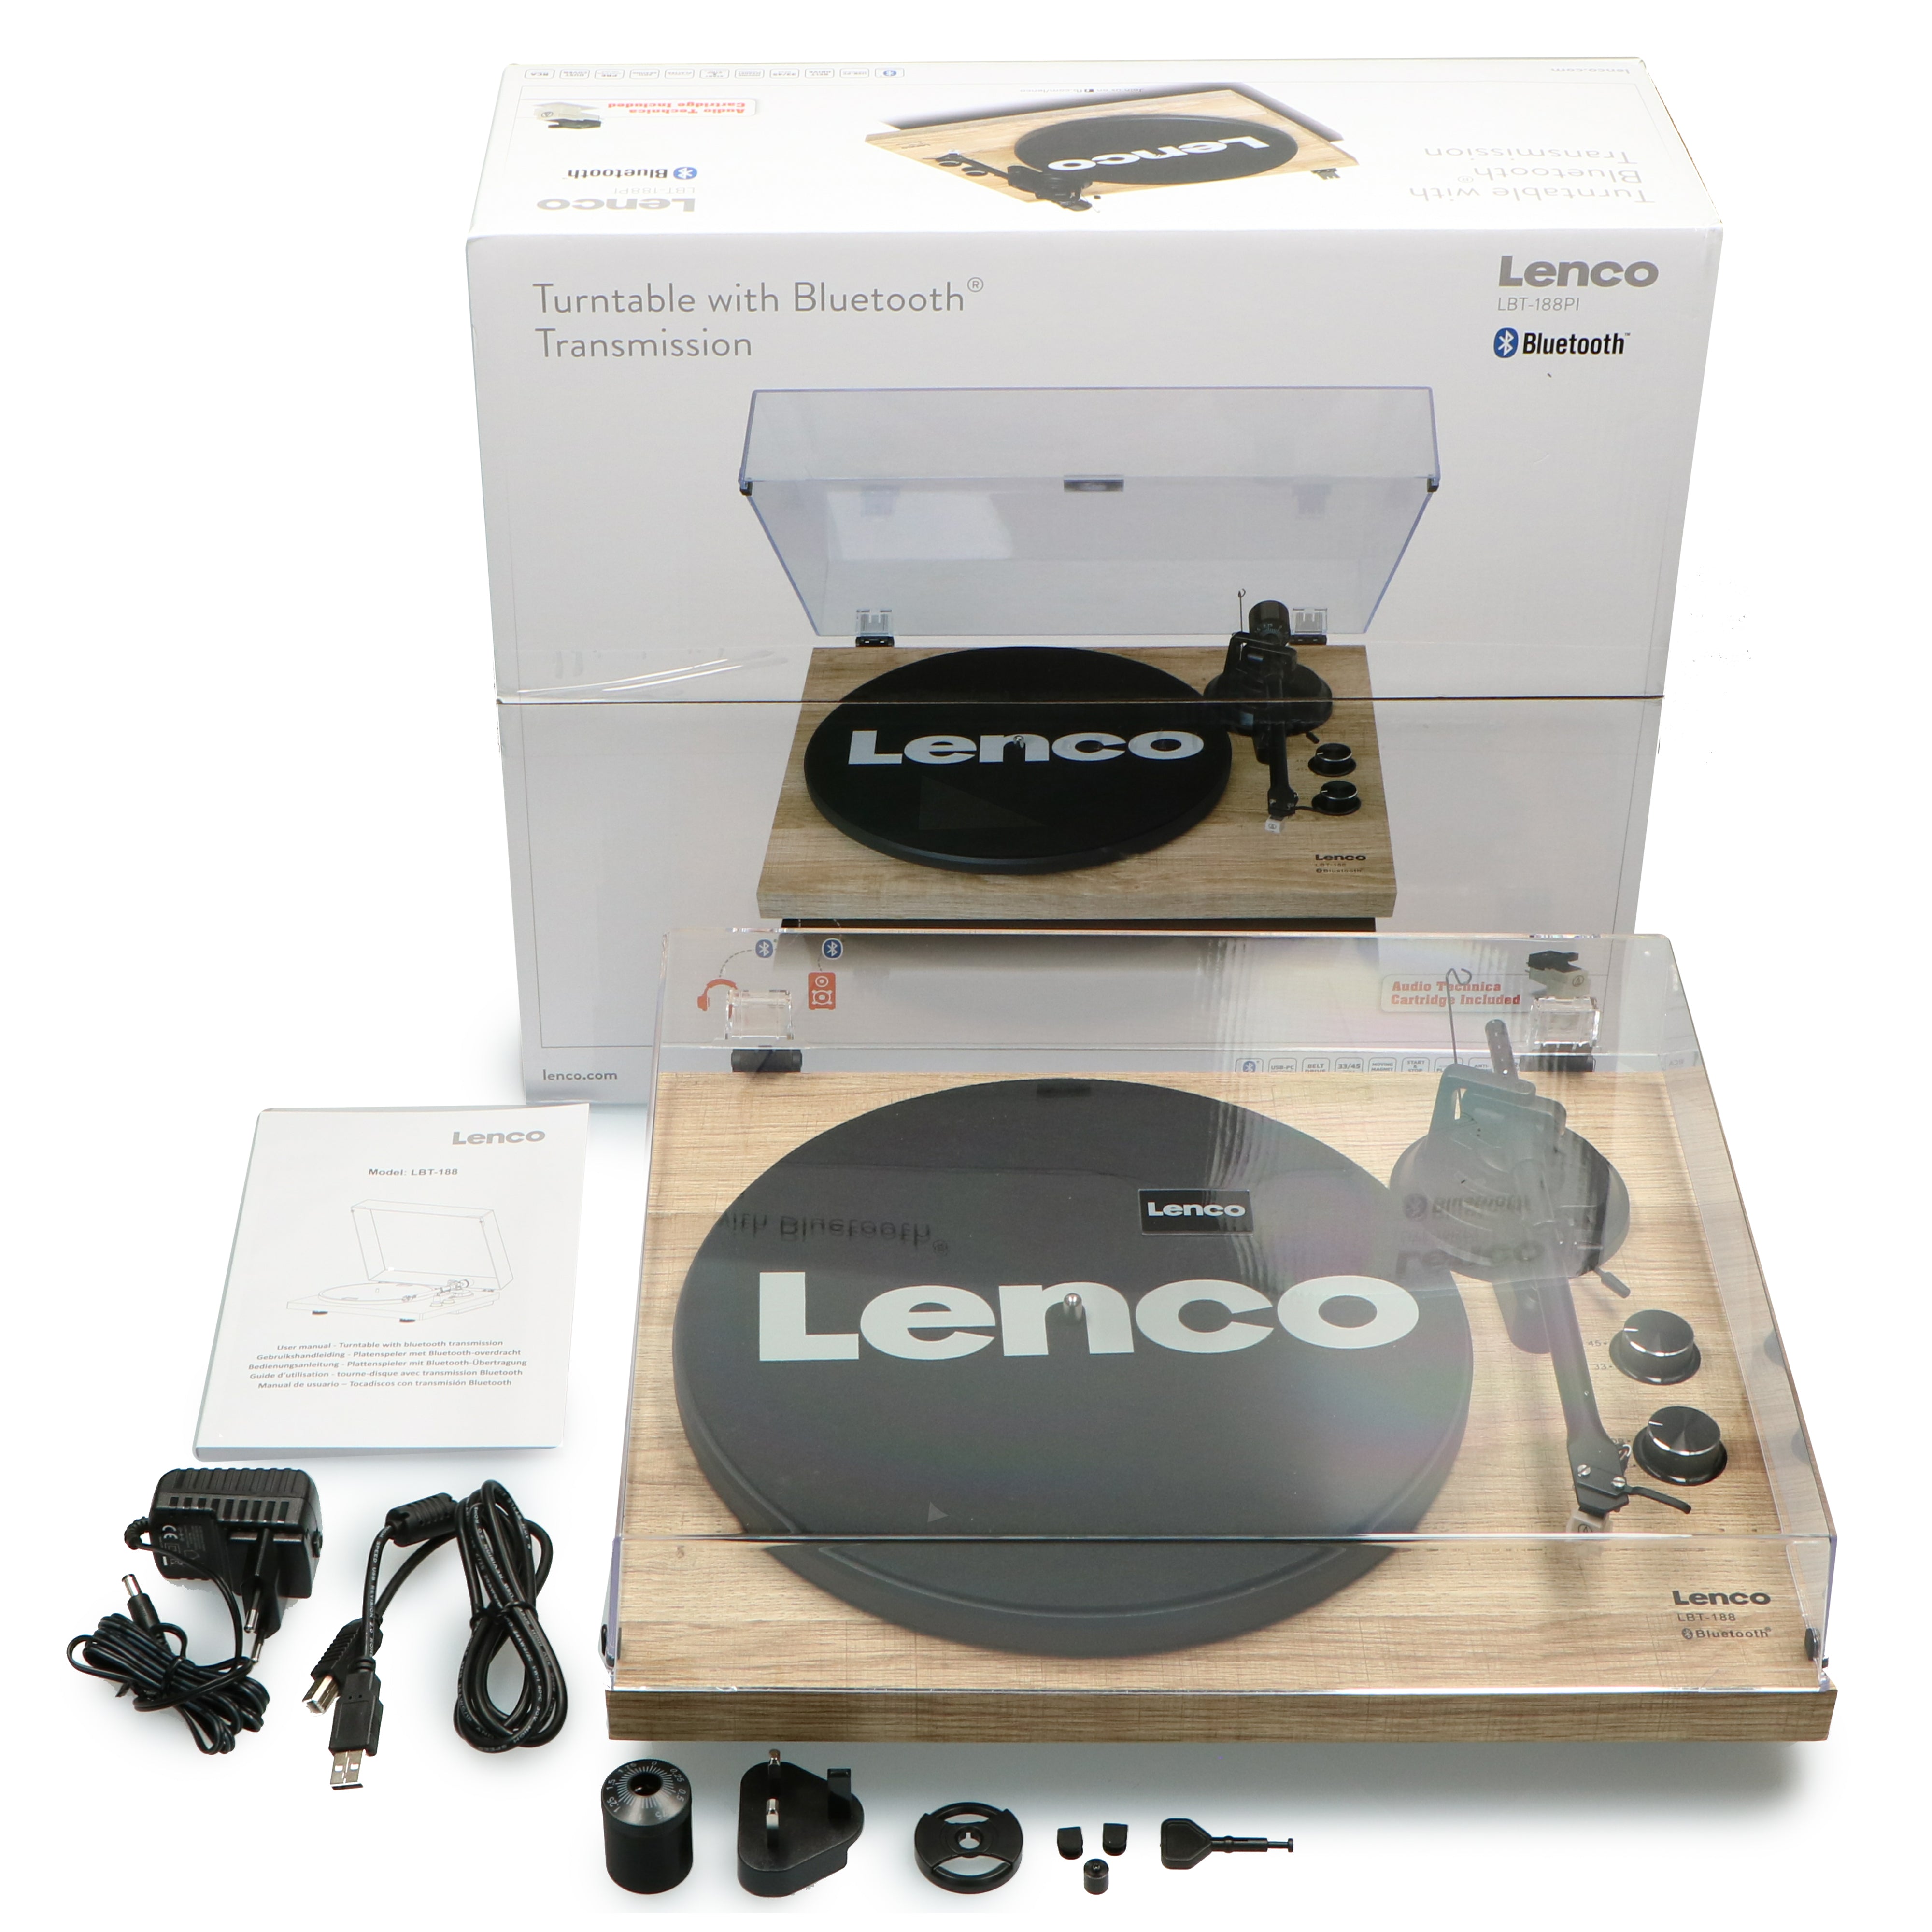 LENCO LBT-188PI with Turntable transmission, - wood Bluetooth®